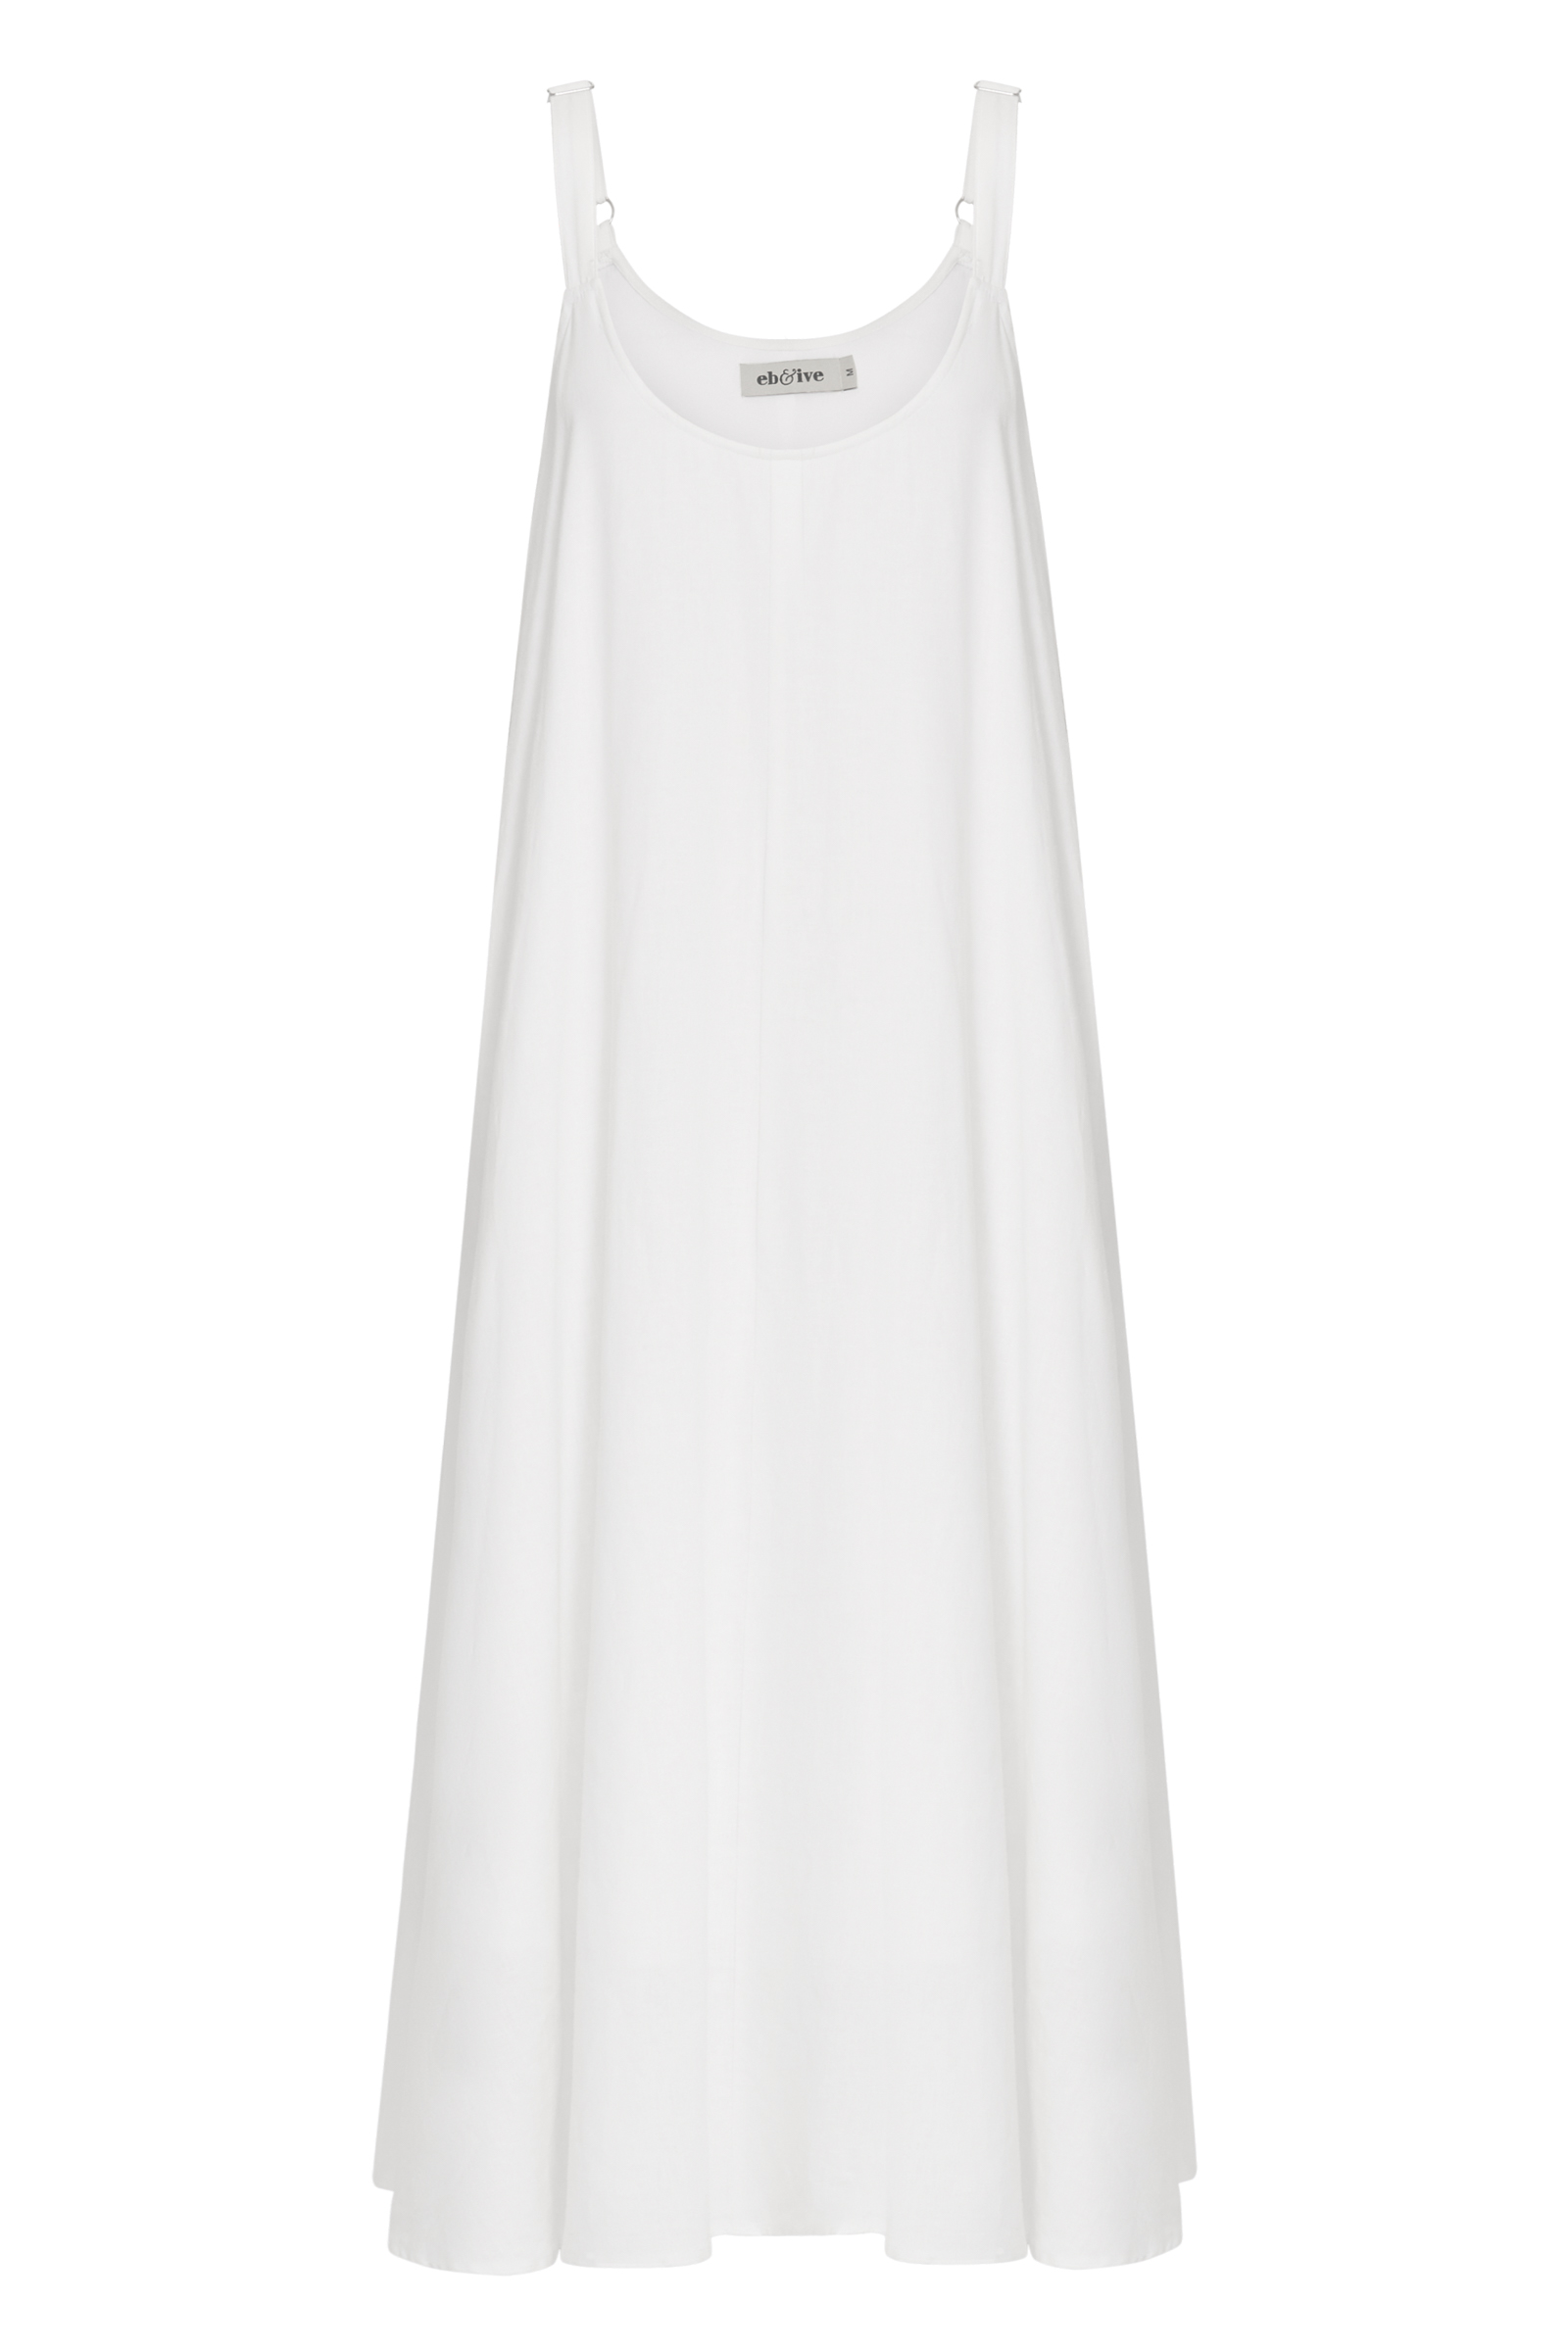 Eb & Ive Blanc Verve Tank Maxi Dress